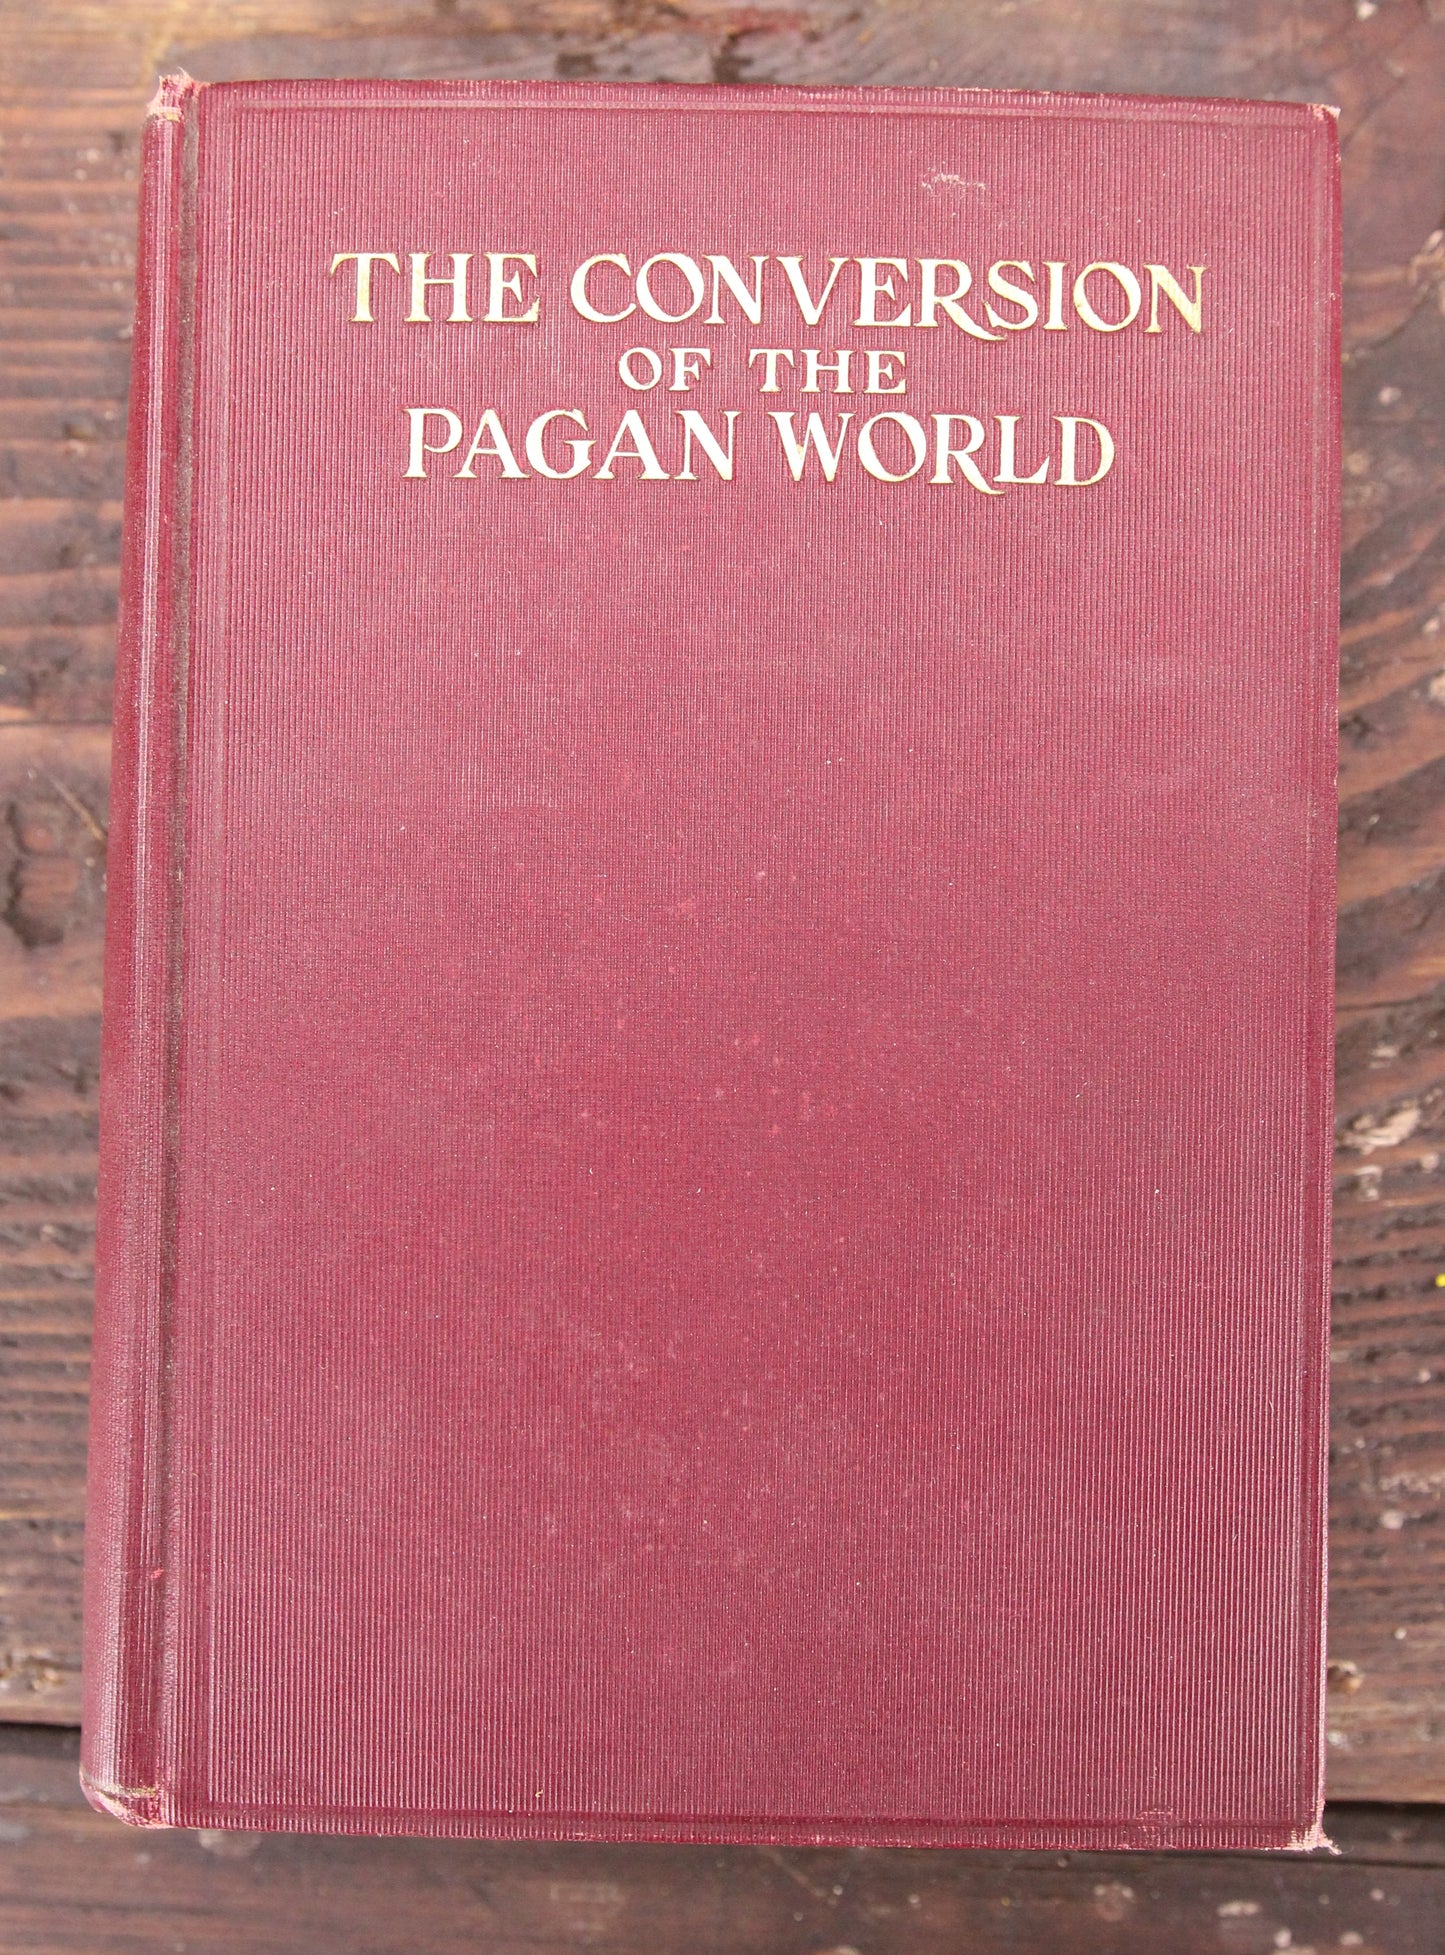 The Conversion of the Pagan World by Rev. Joseph F. McGlinchey, Copyright 1921